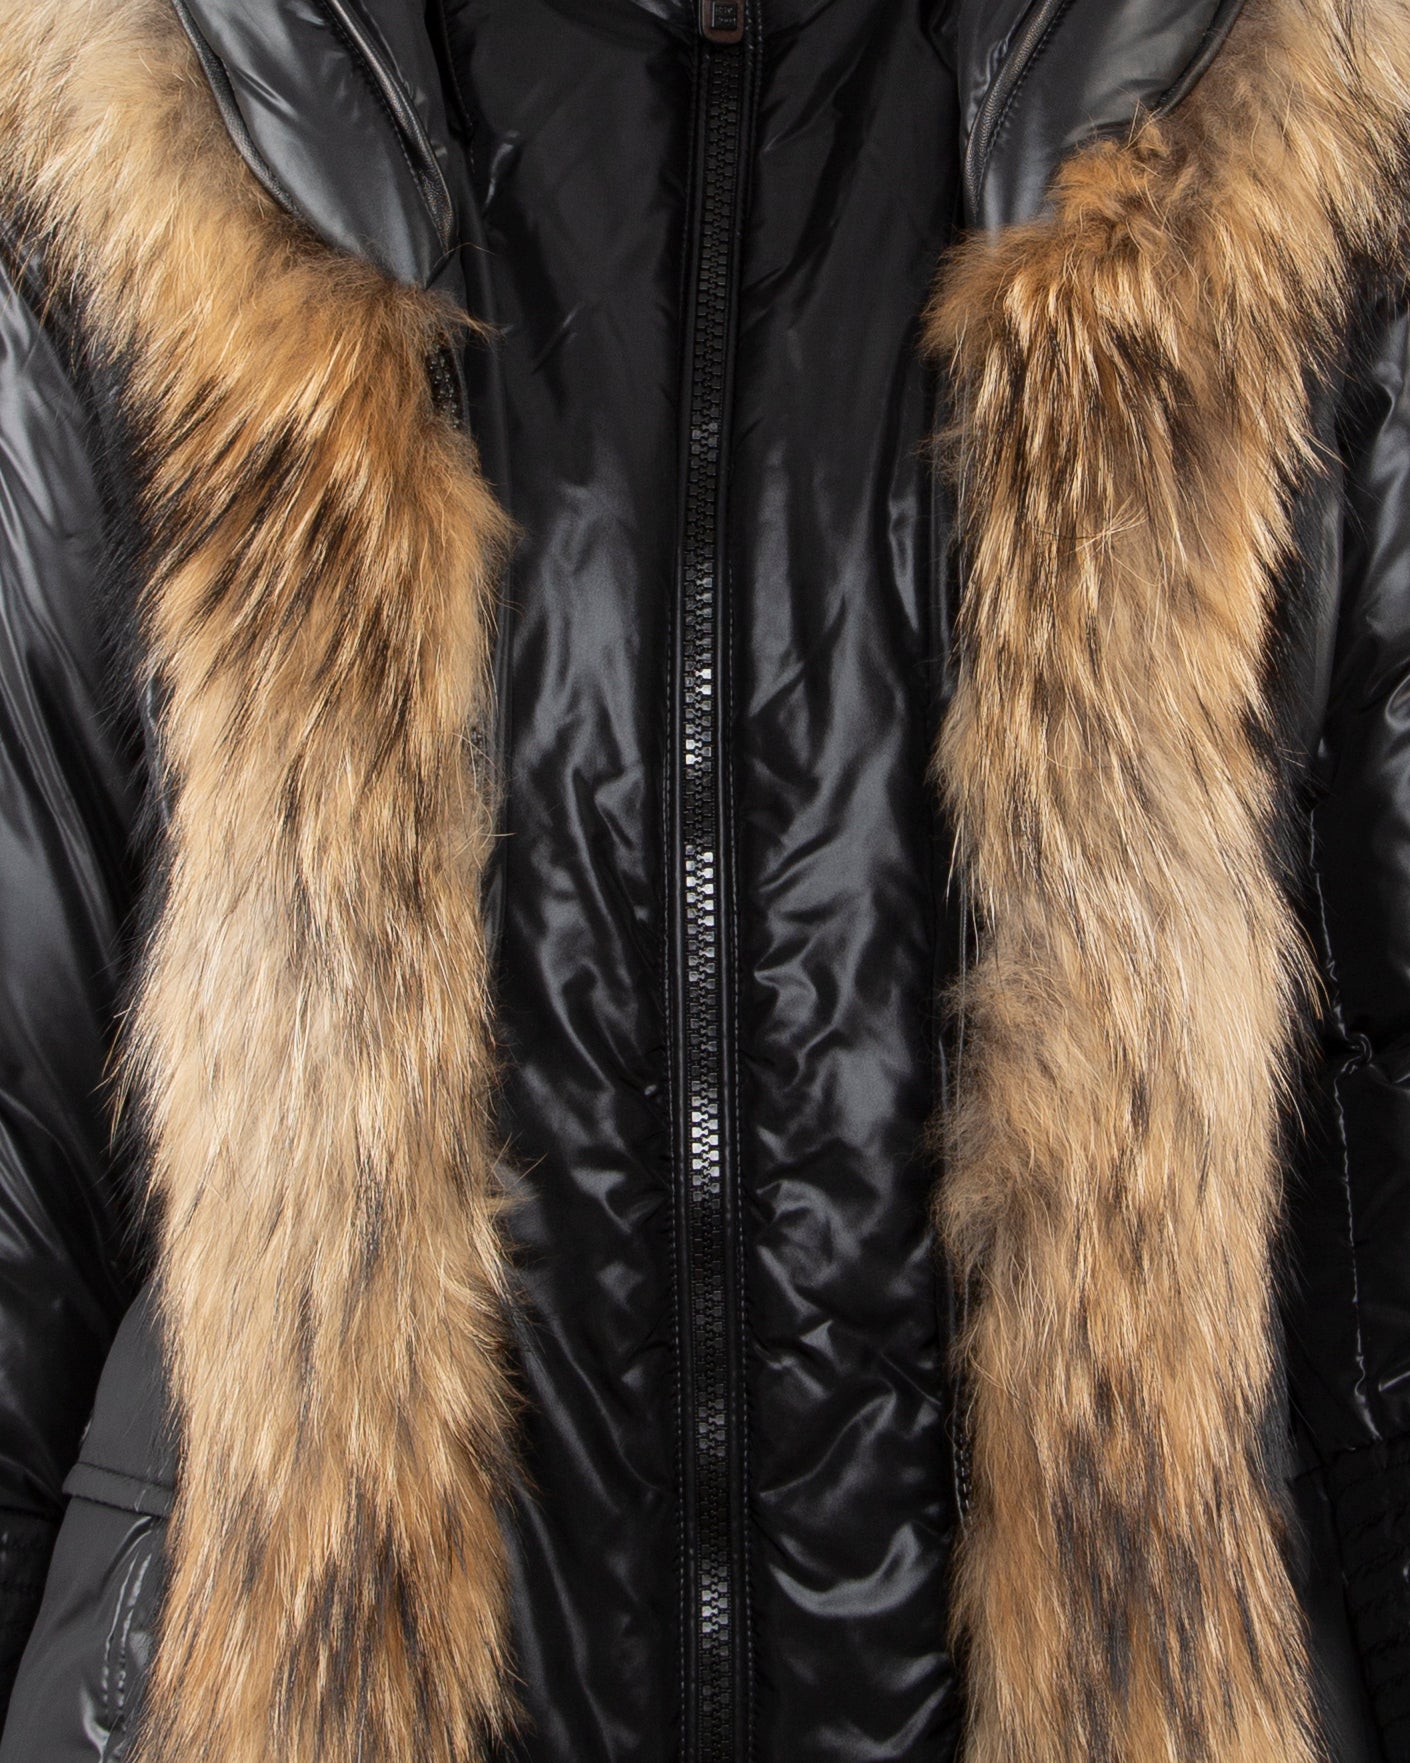 GELLERY Down Jacket With Fur Trim